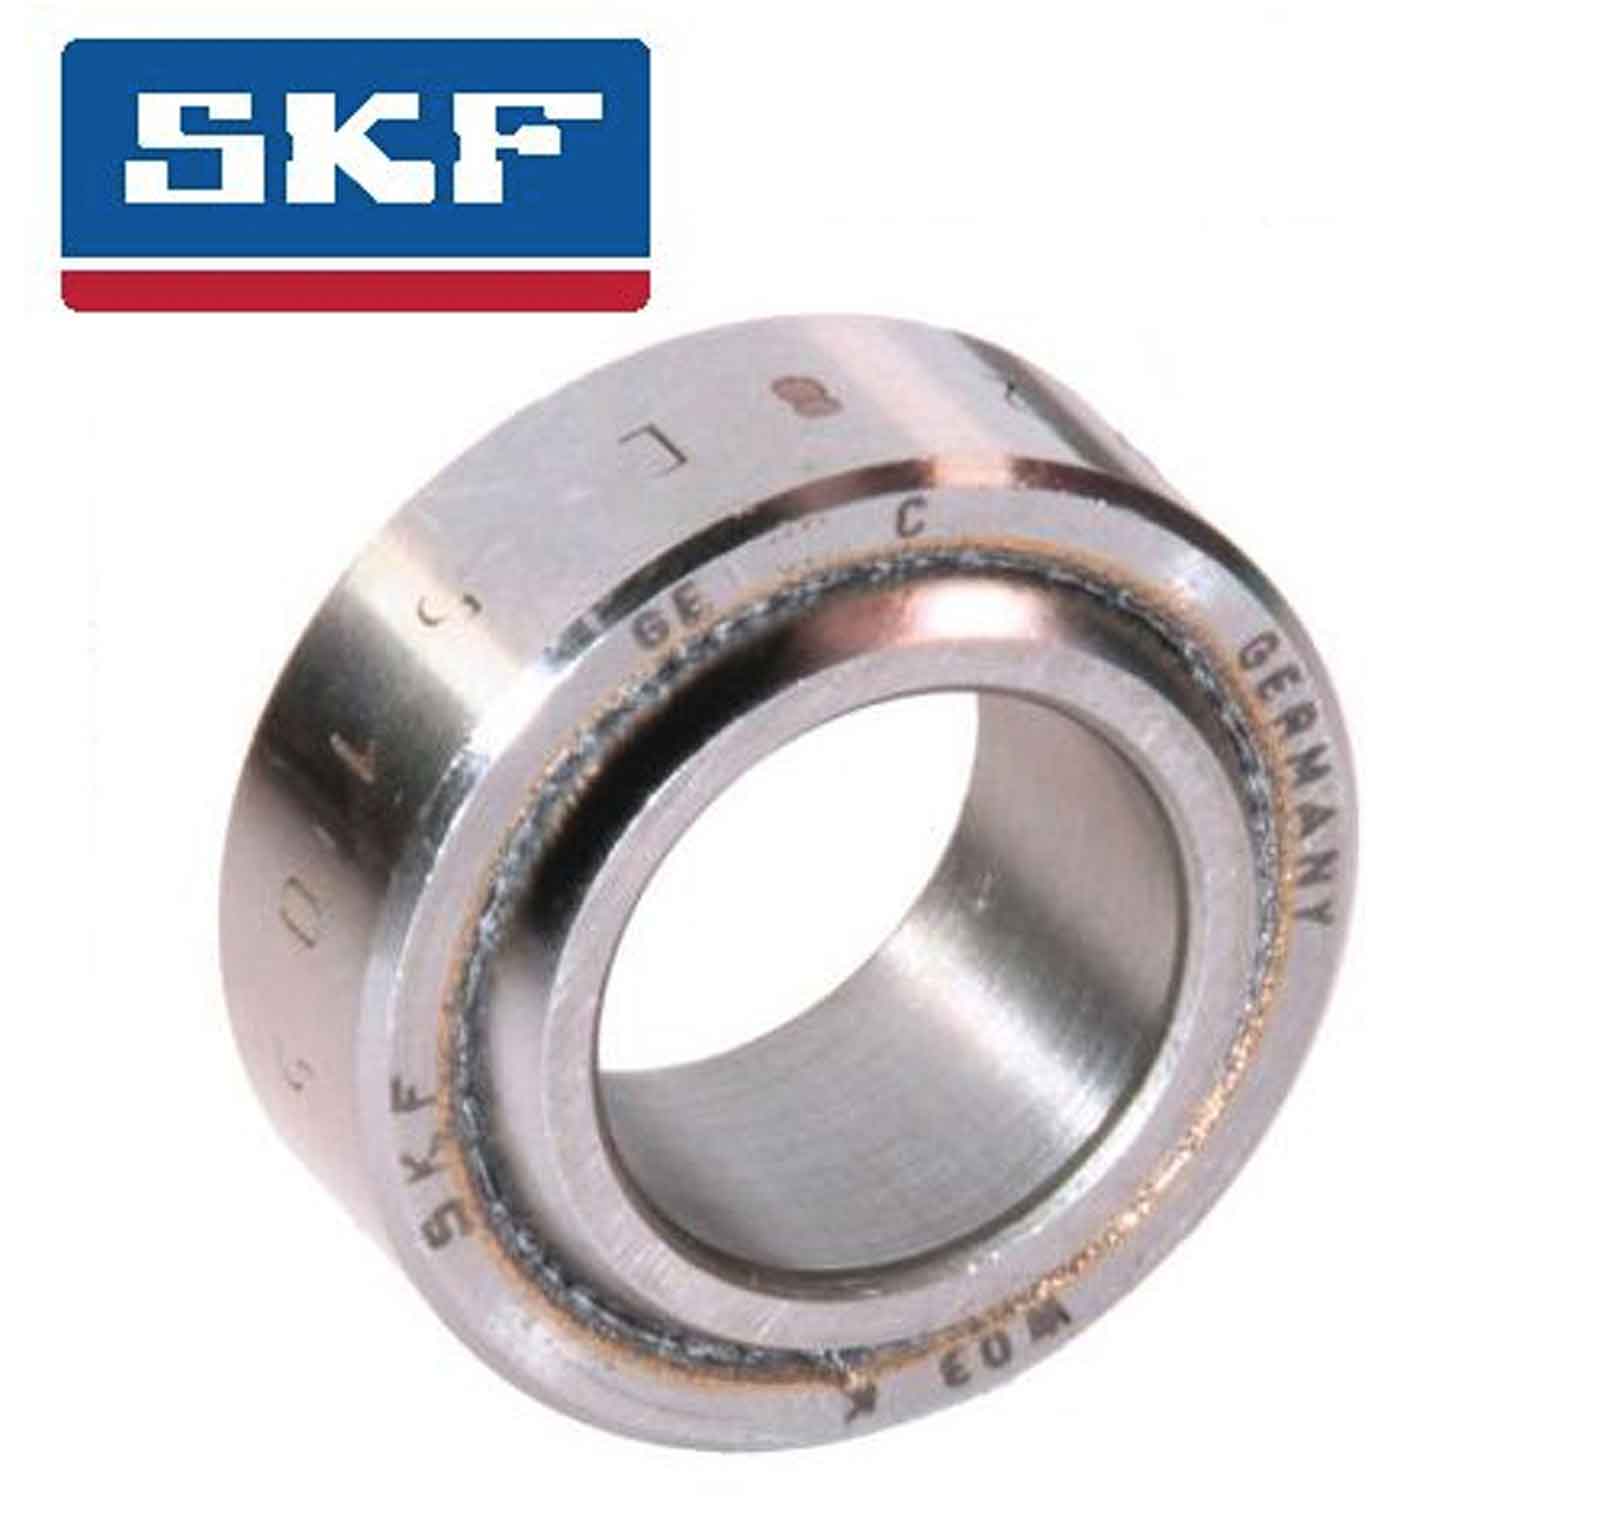 SKF M25 Spherical Plain Bearing (GEH25C)